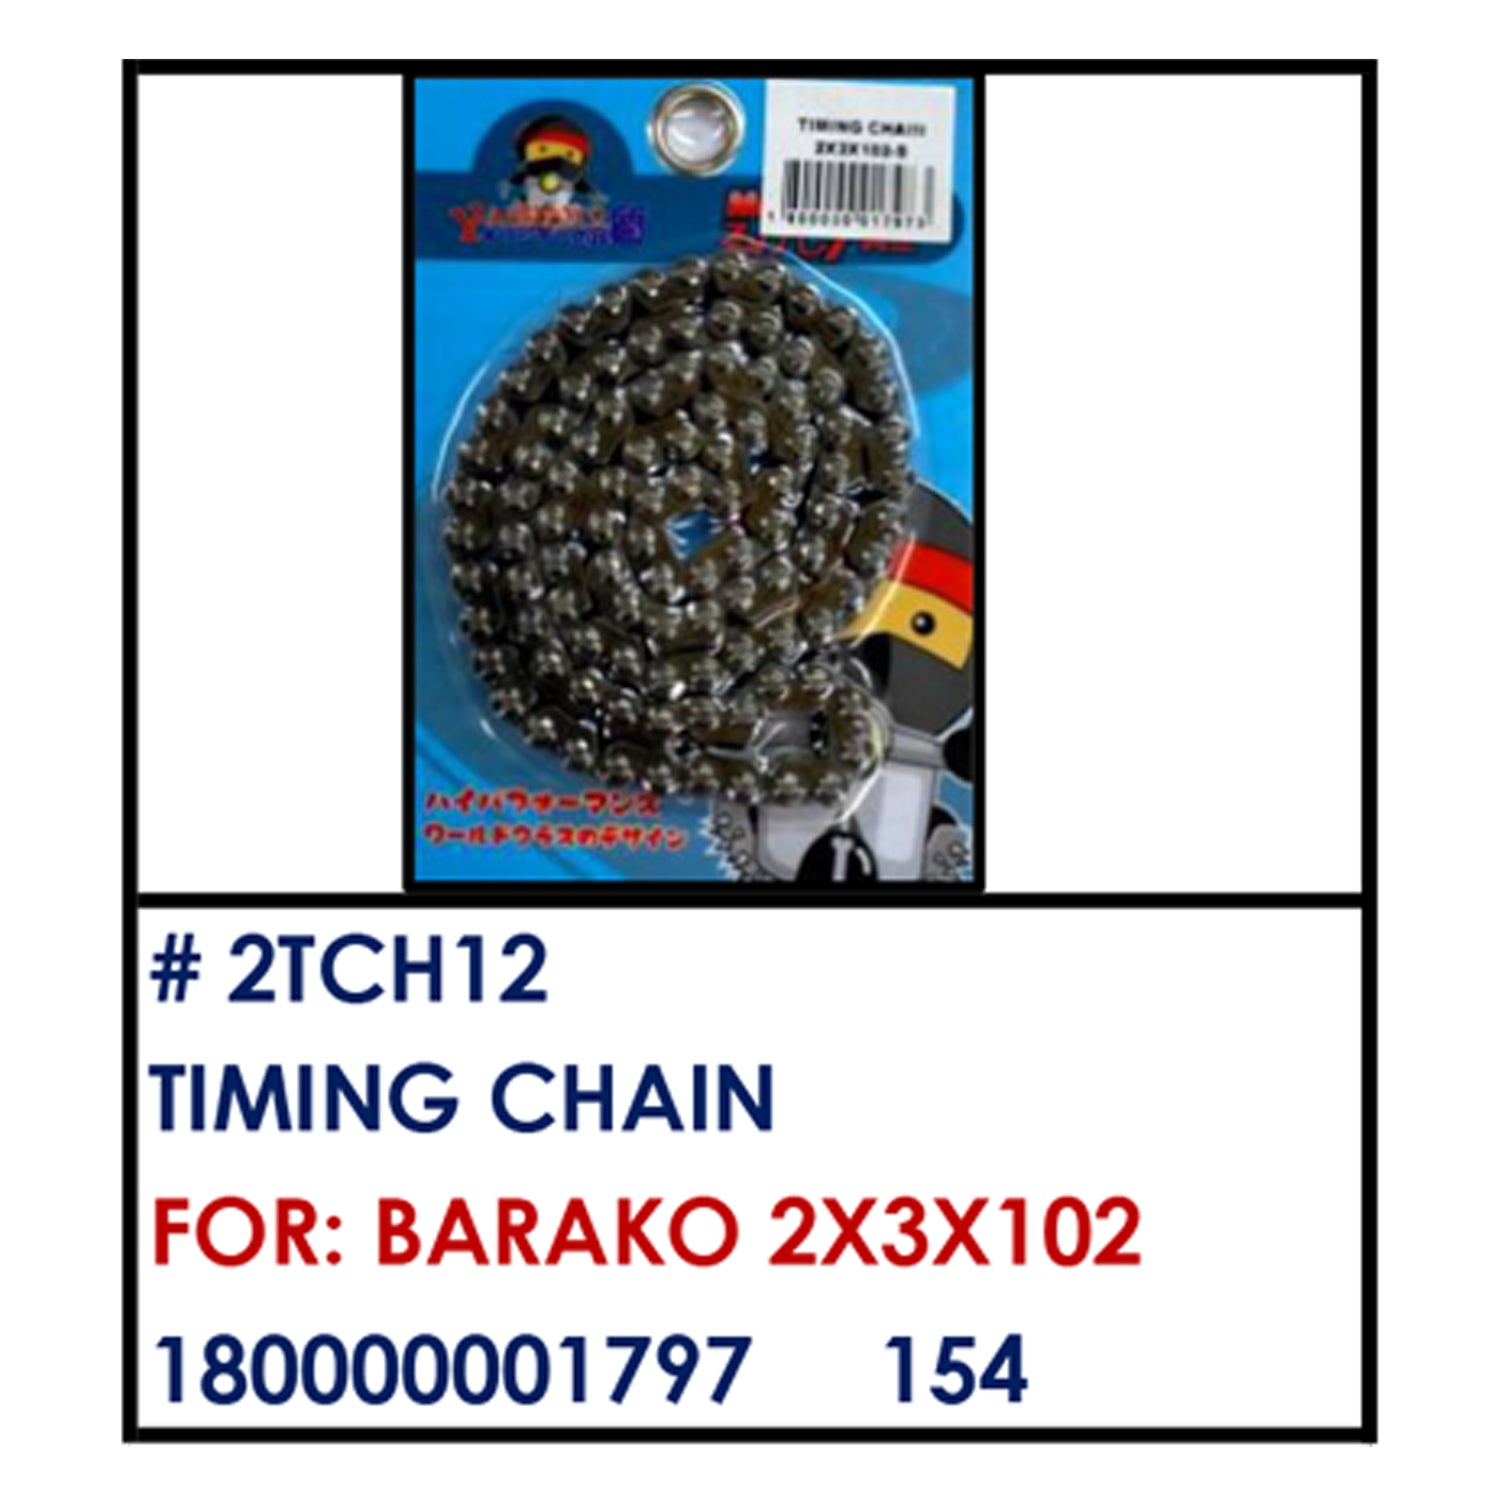 TIMING CHAIN (2TCH12) - BARAKO 2X3X102 | YAKIMOTO - BESTPARTS.PH